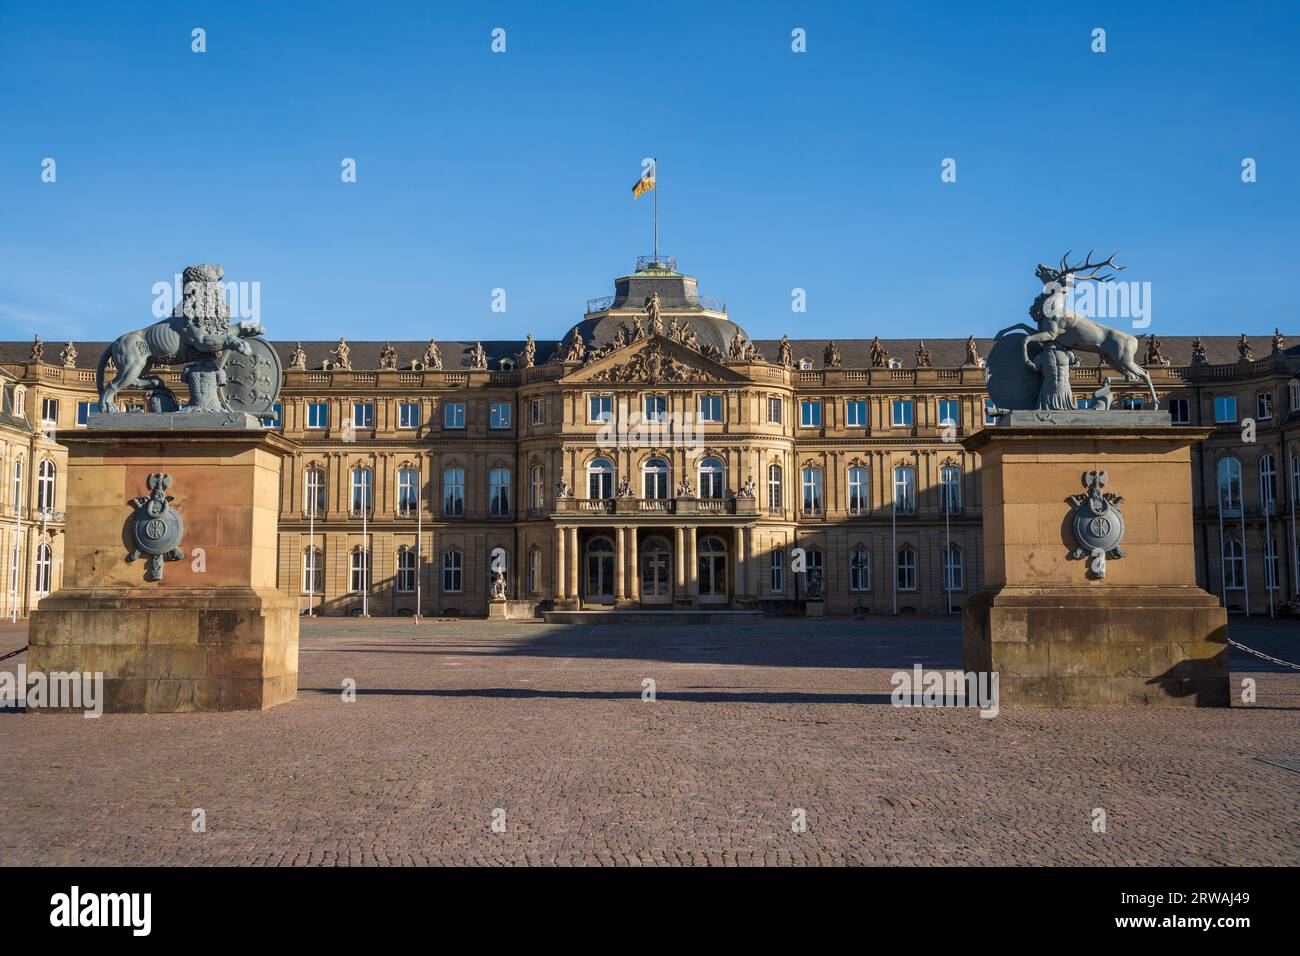 New Castle Neues Schloss, Castle in Stuttgart, Germany Stock Photo